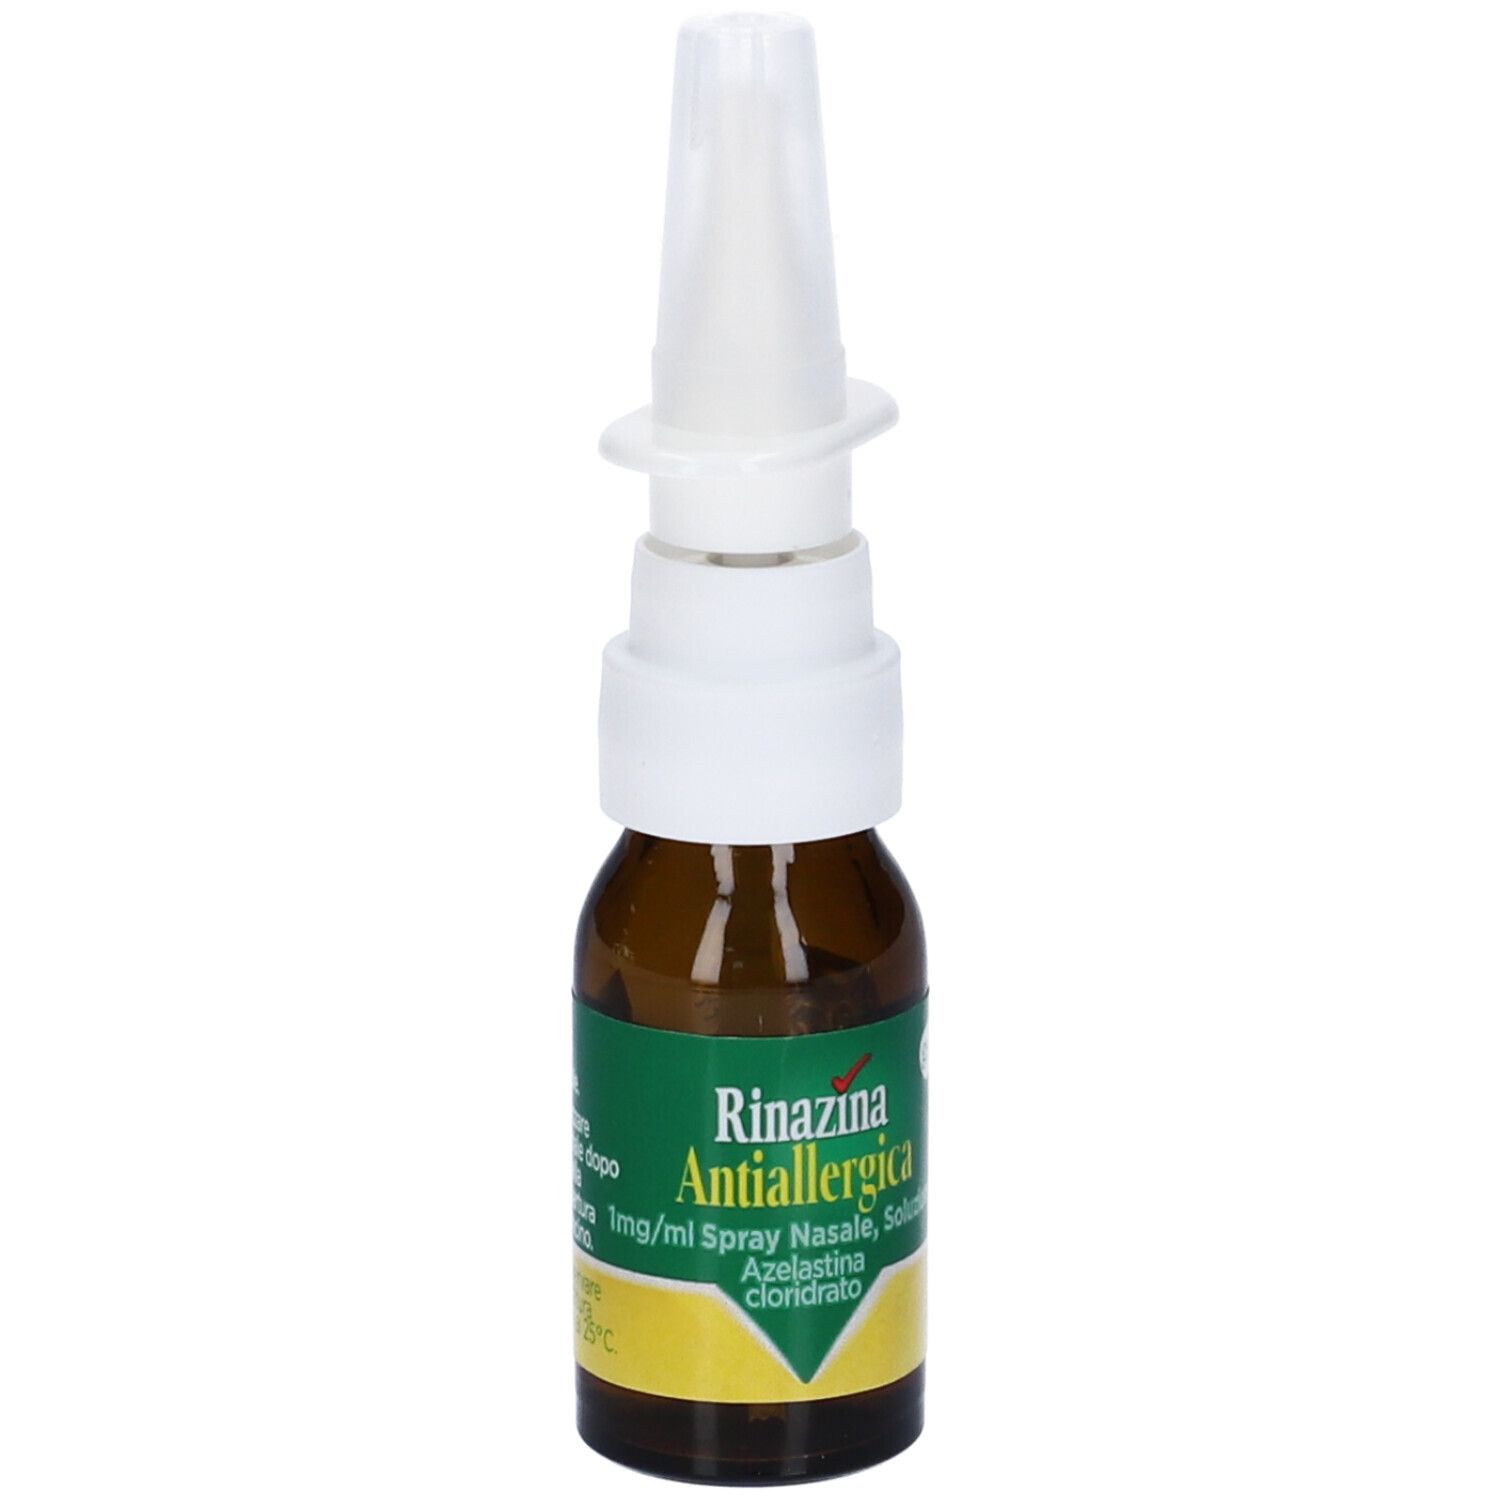 Rinazina® Antiallergica Spray Nasale